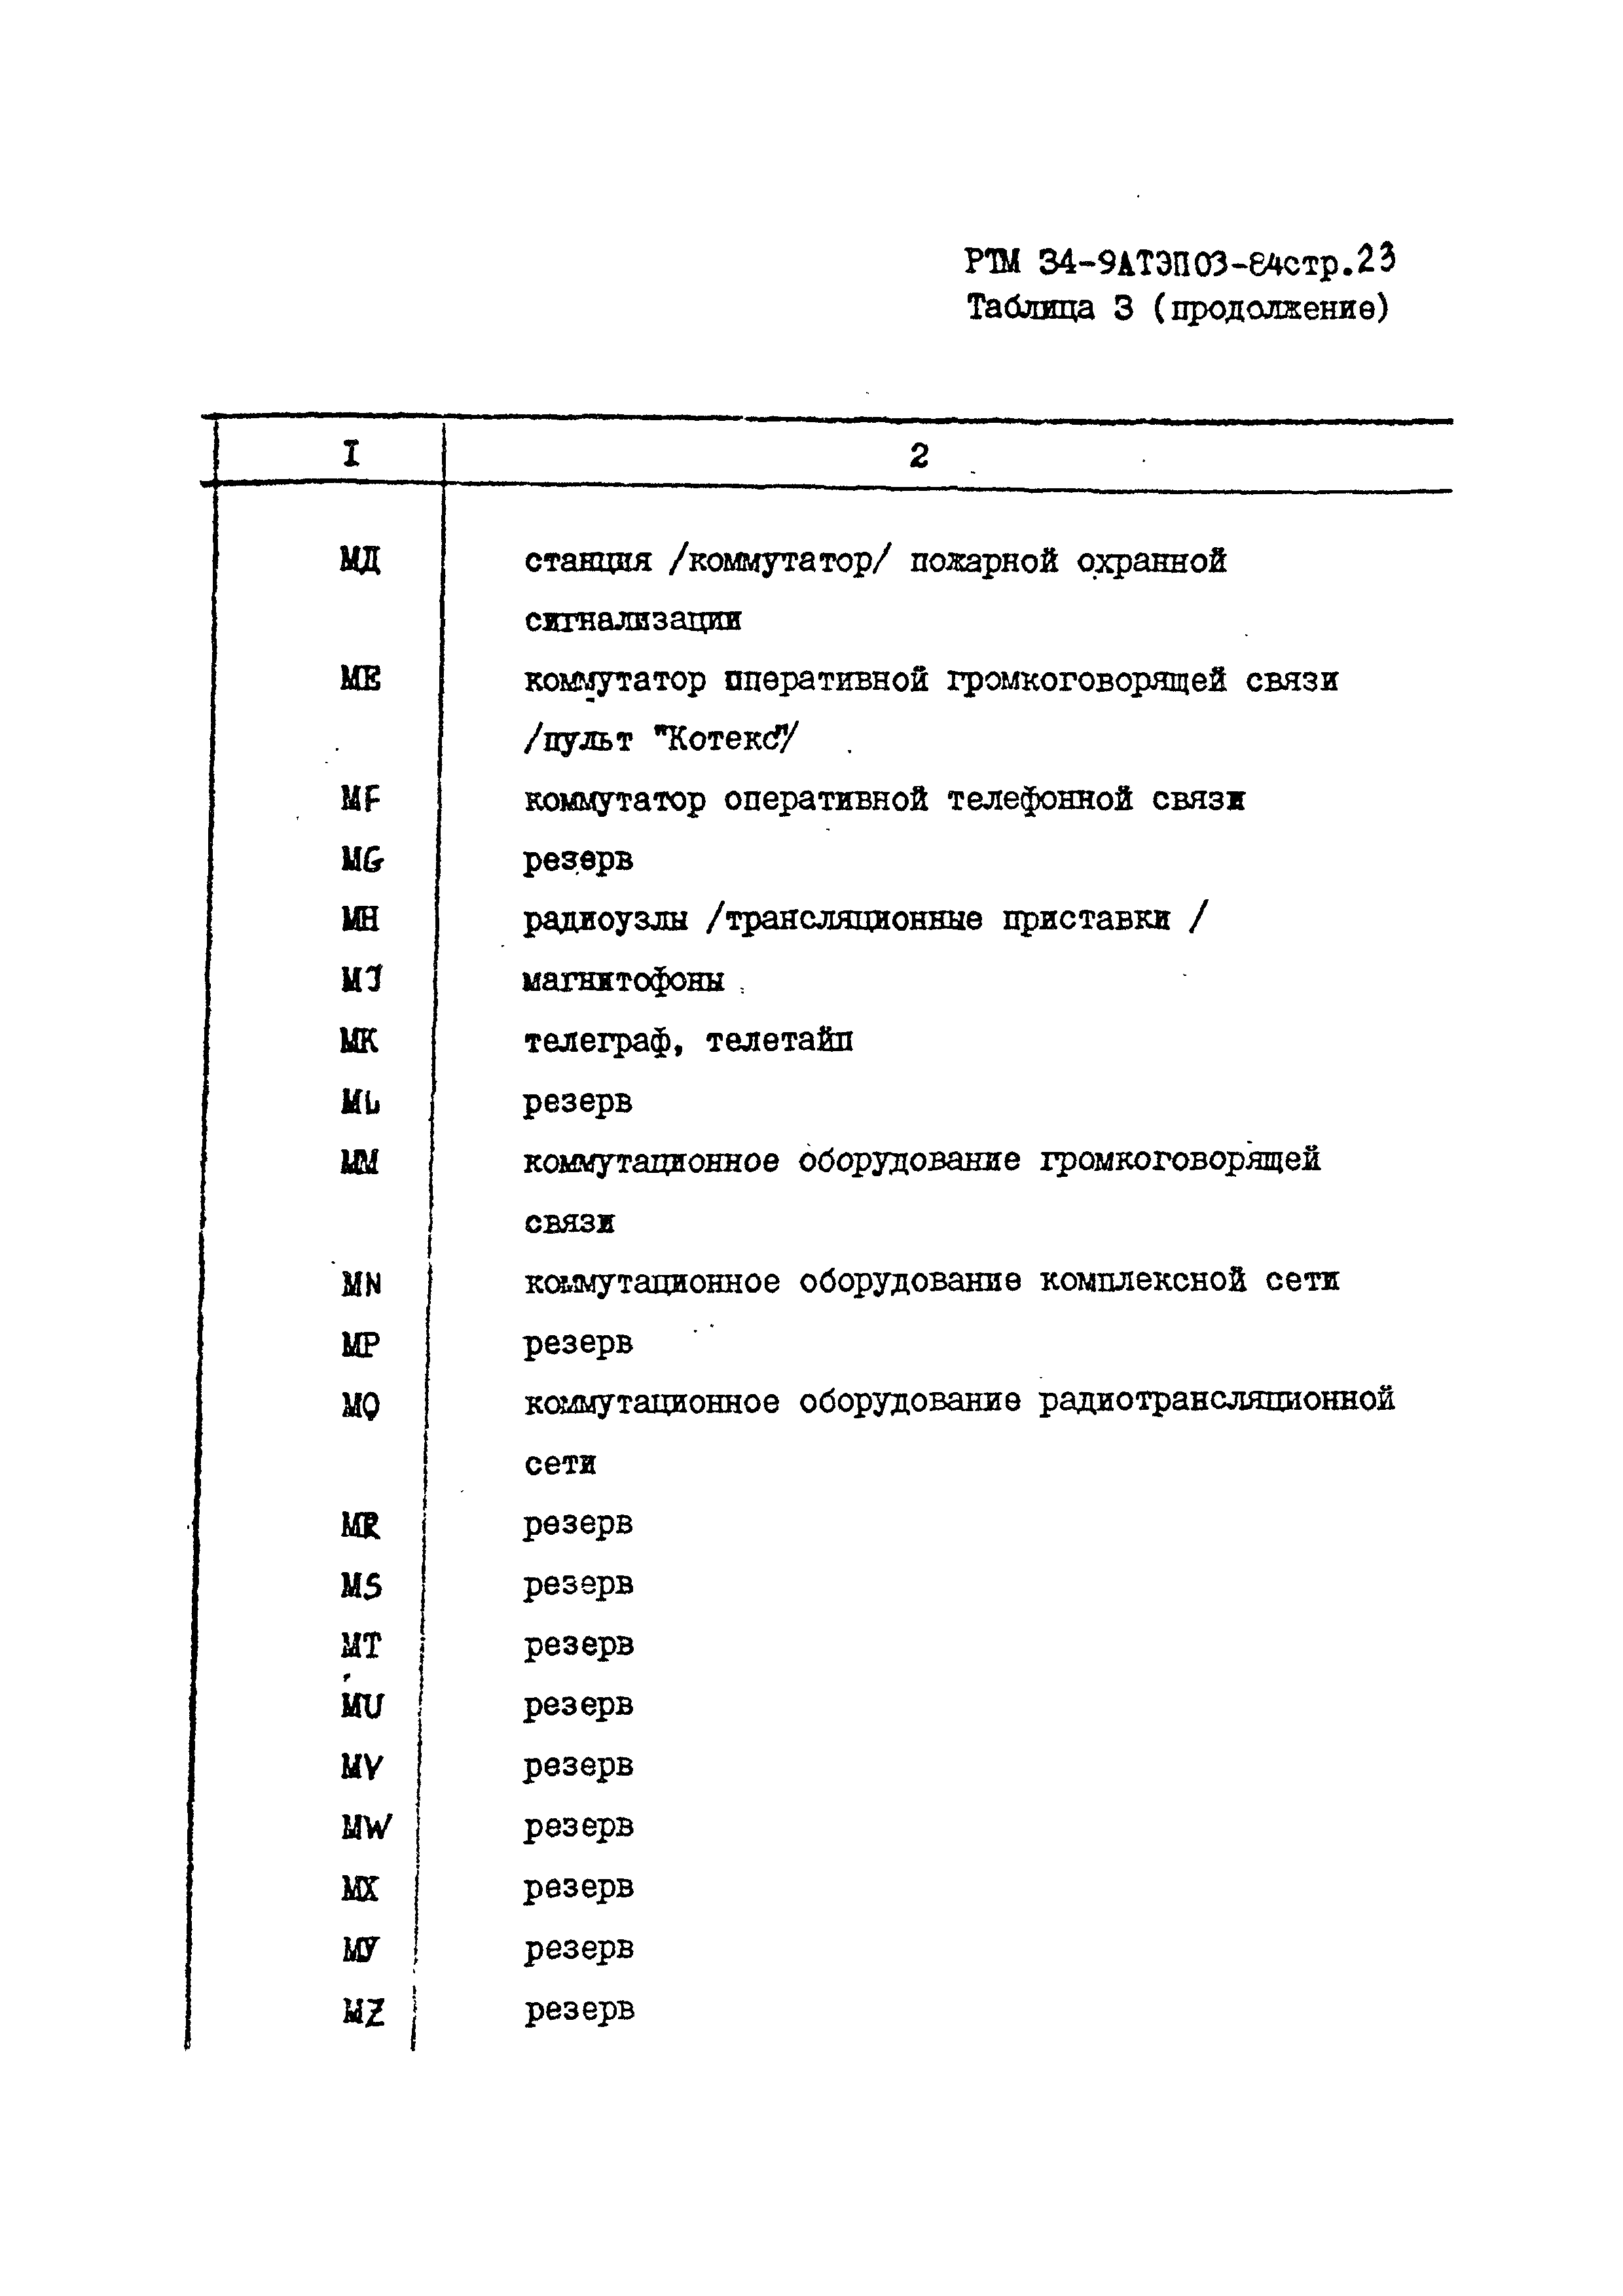 РТМ 34-9АТЭПОЗ-84